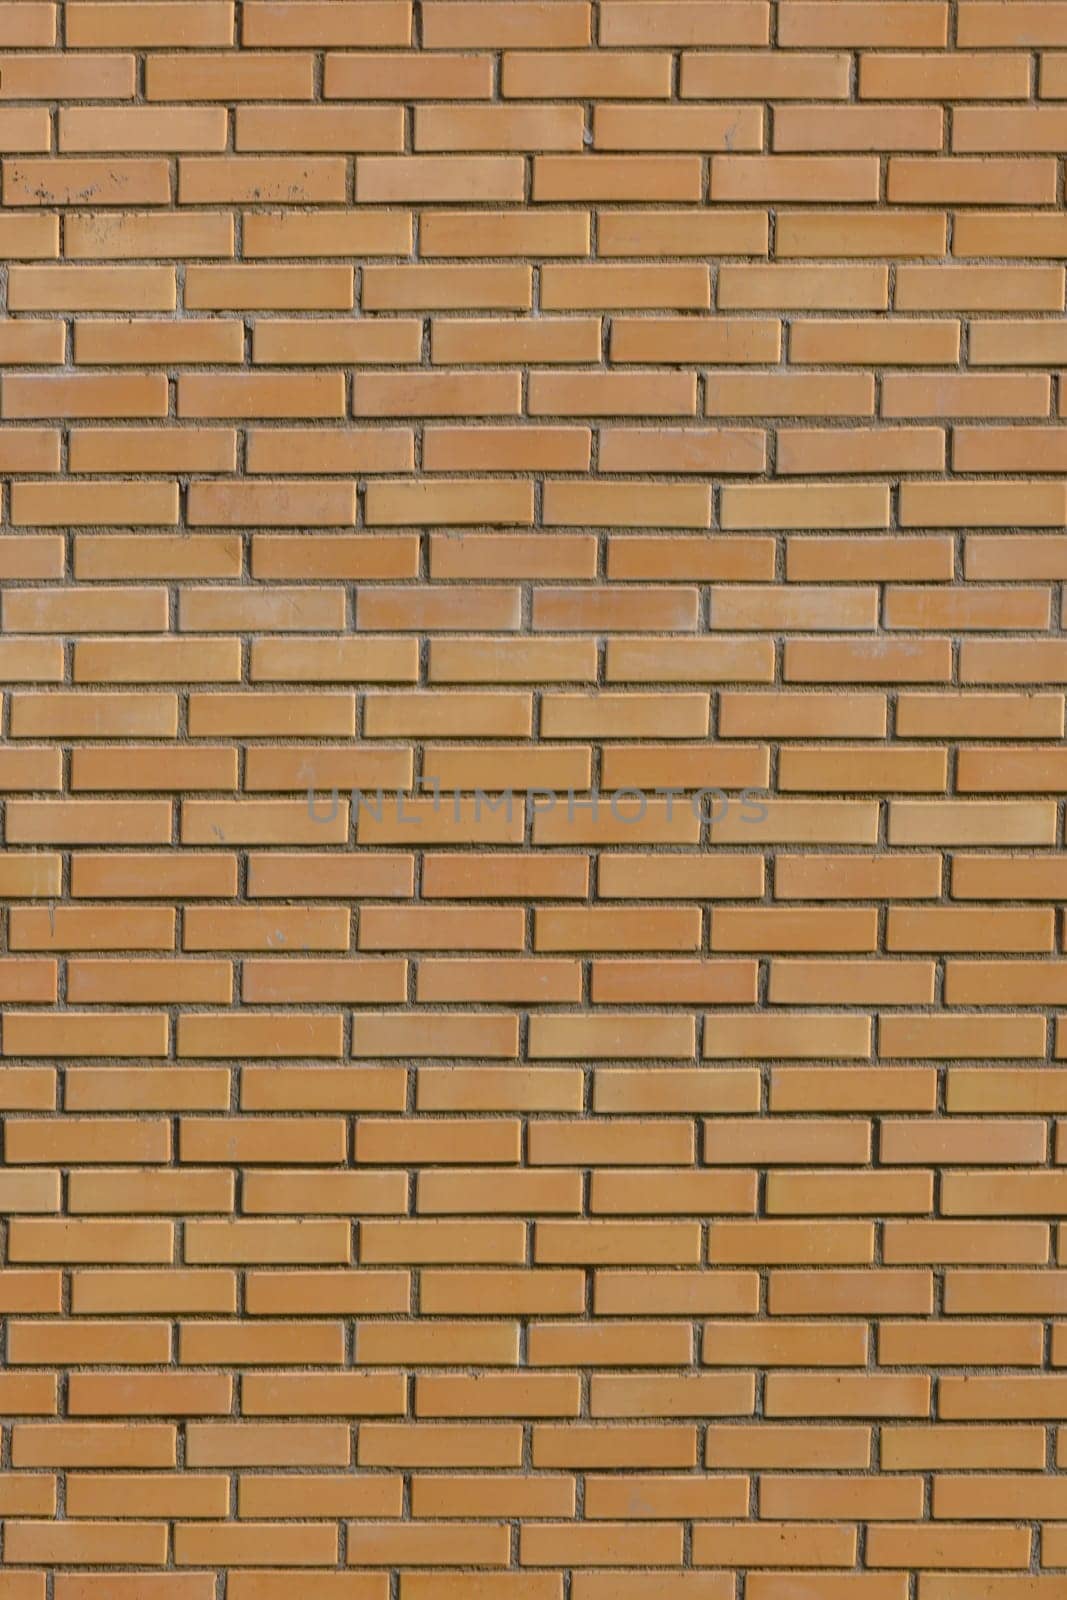 yellow brick wall as background 7